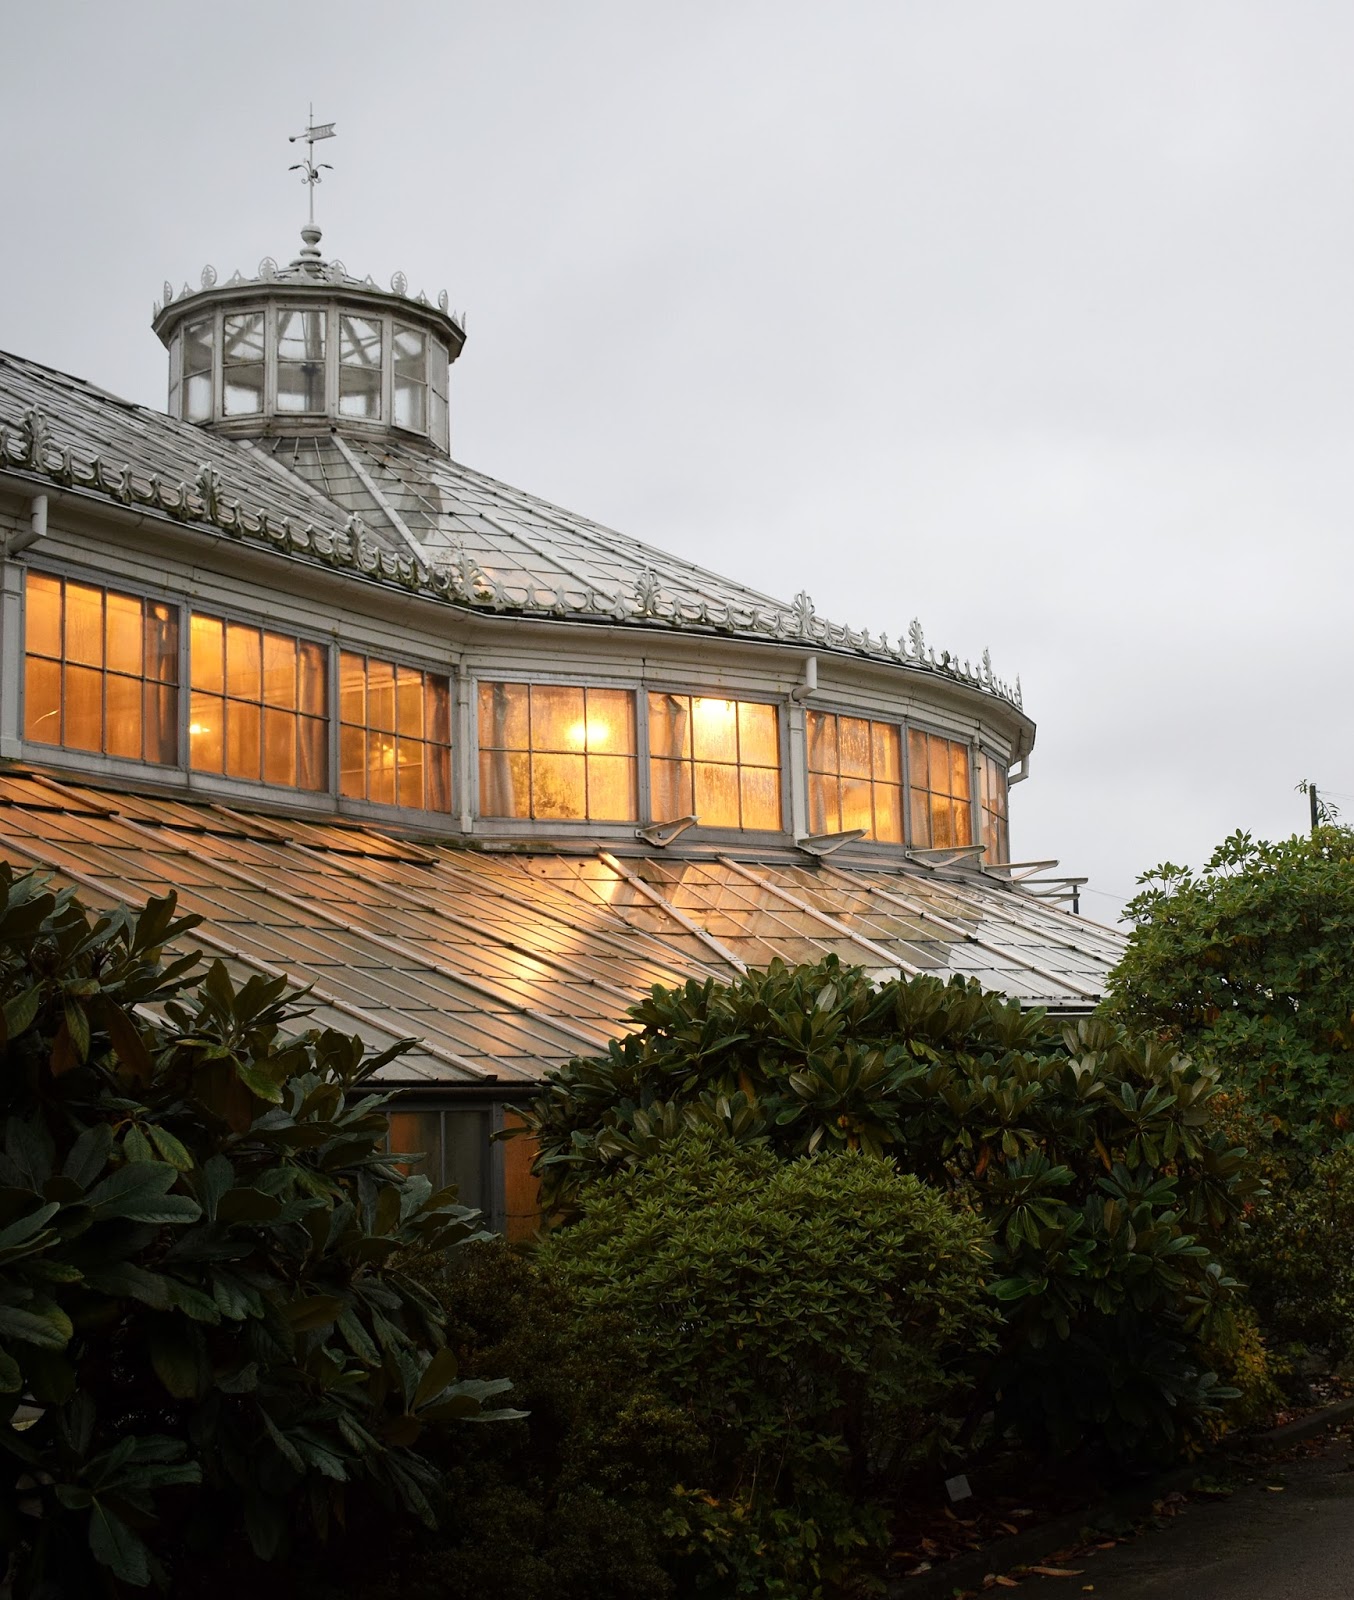 University of Copenhagen, Botanical Garden (palmhouse)